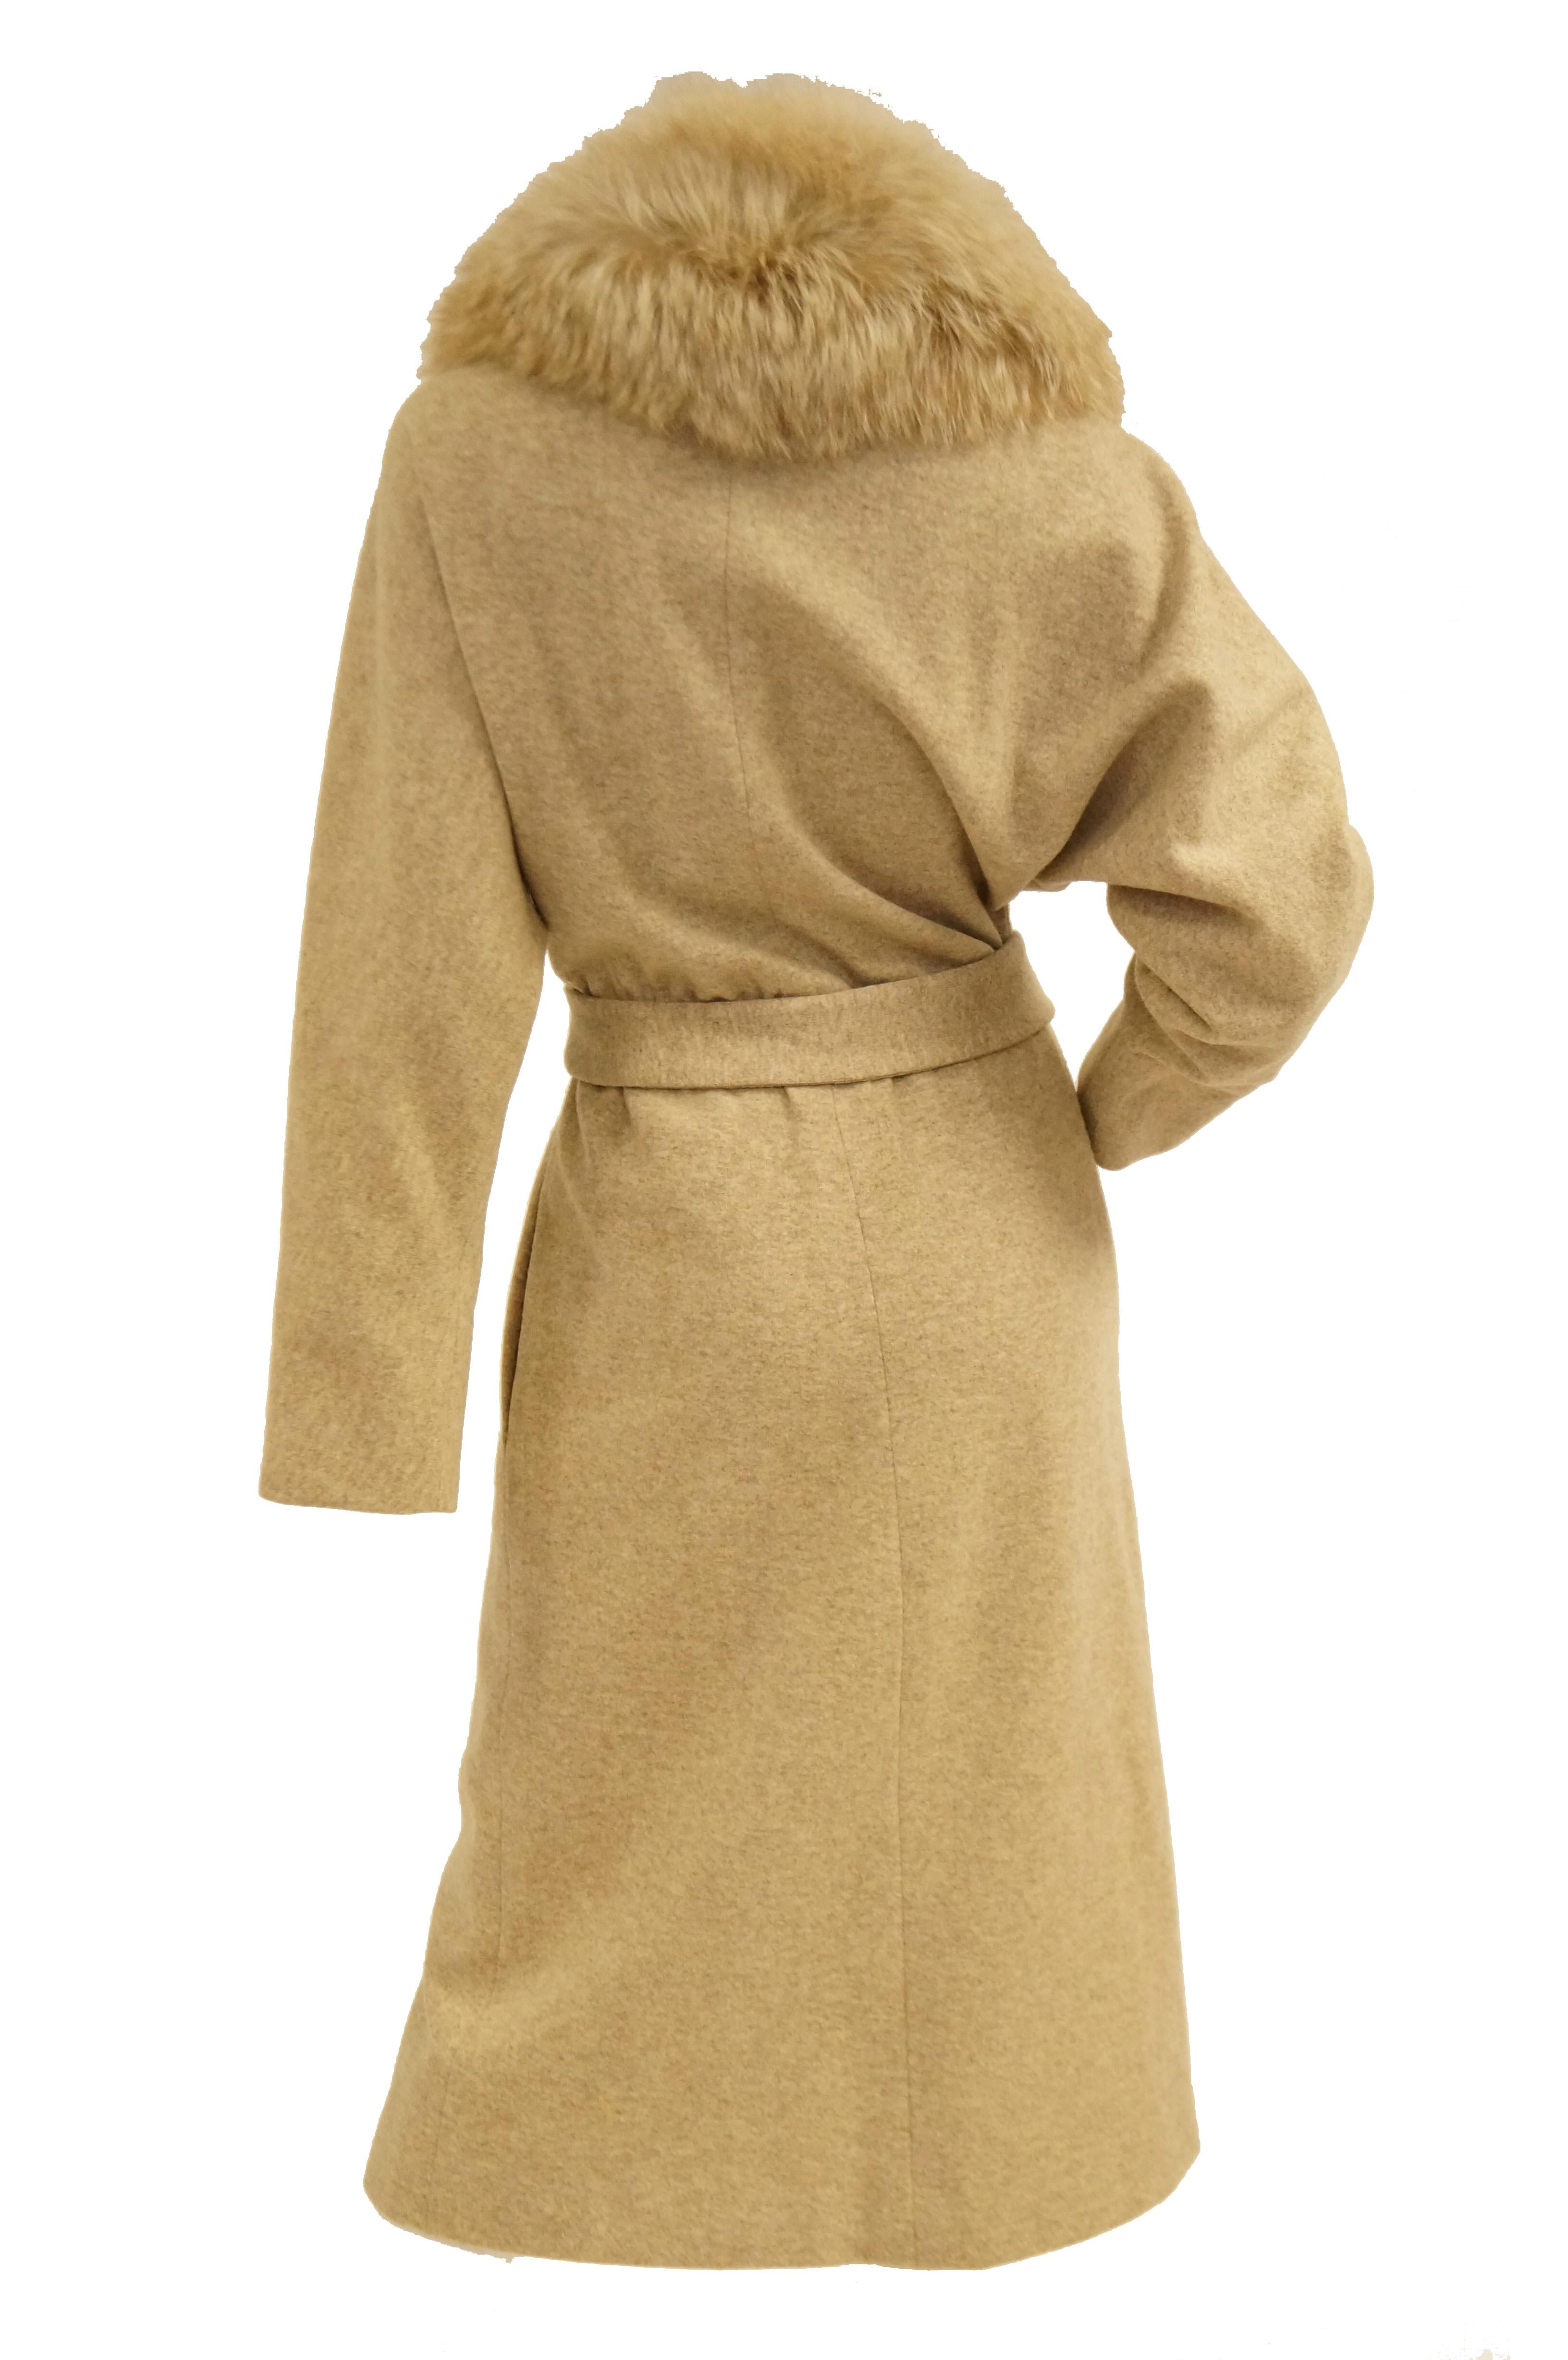 Women's or Men's 1970s Bill Blass Plush Fox Collar Wool Wrap Coat for Neiman Marcus